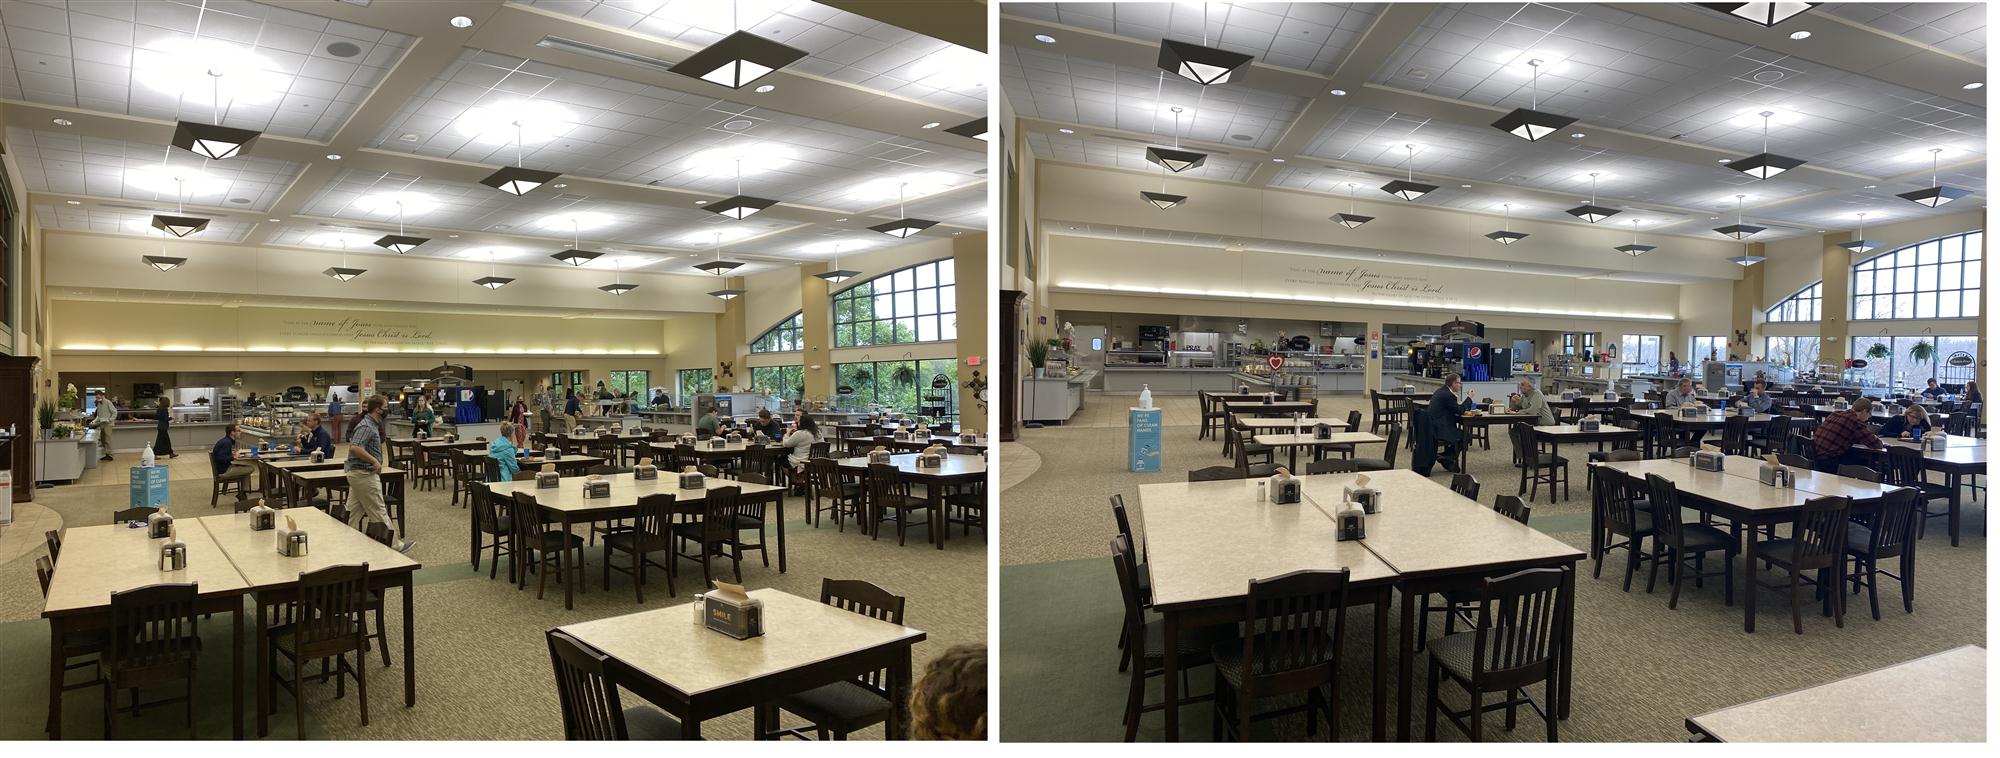 Maranatha University LED lighting for Lunch Room